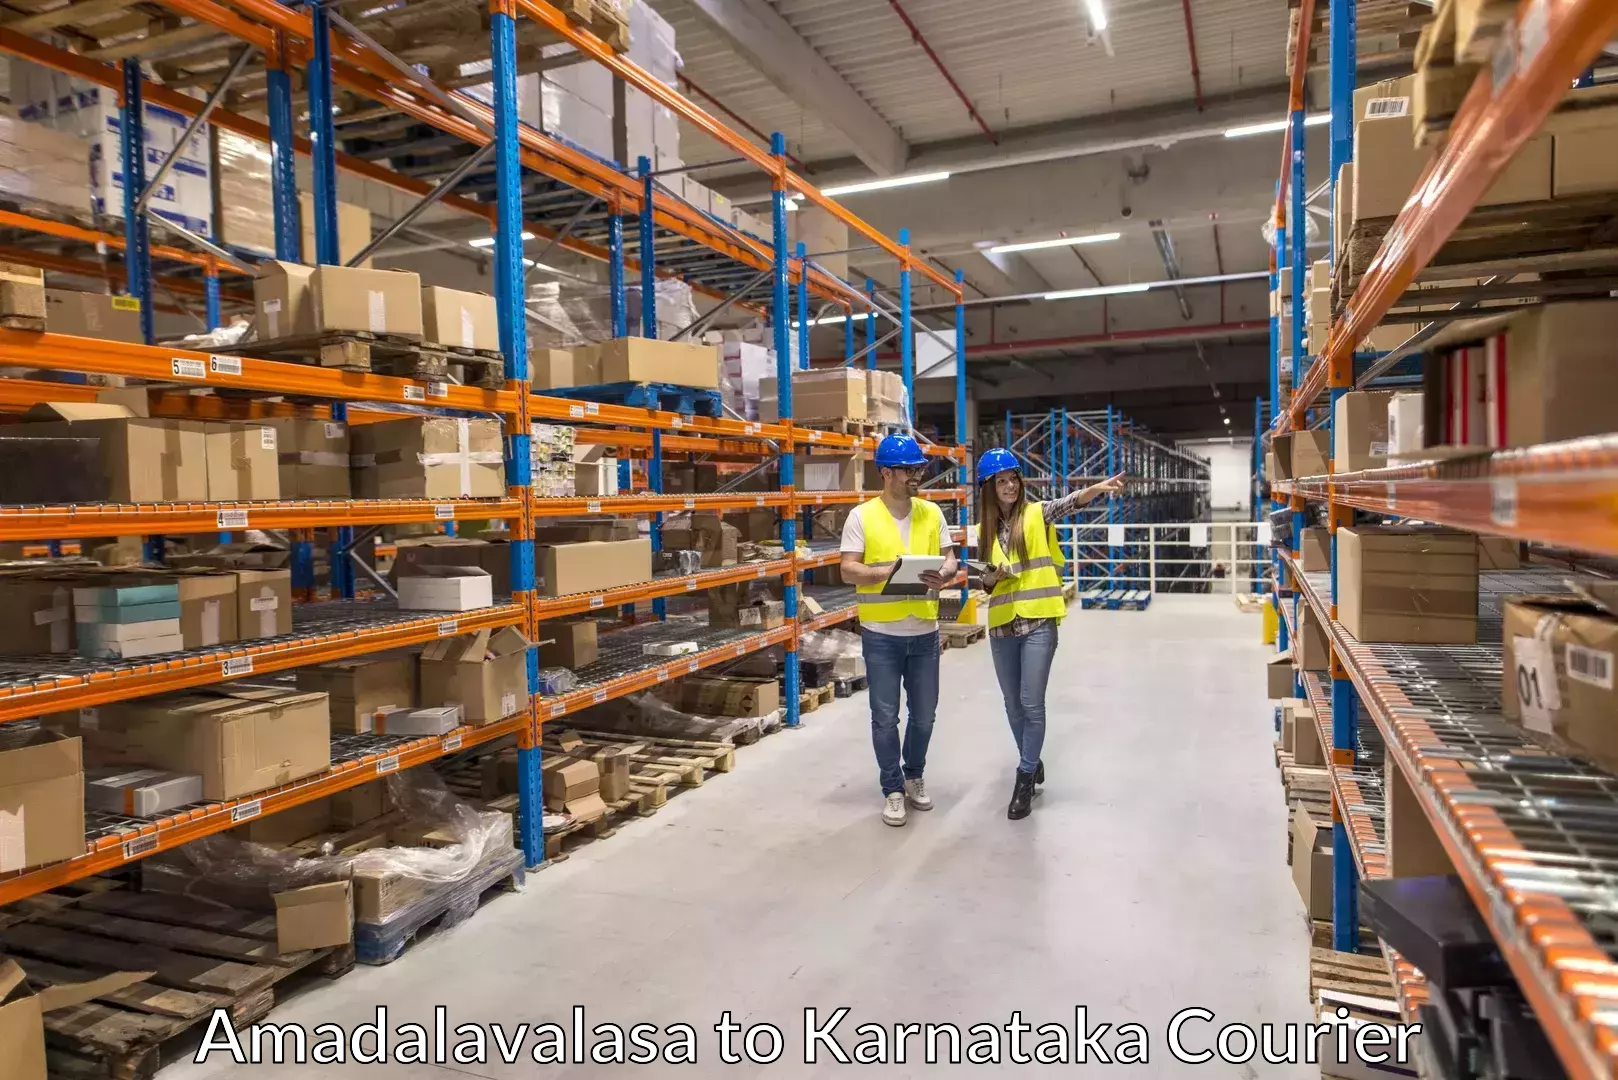 Professional moving company Amadalavalasa to Karnataka